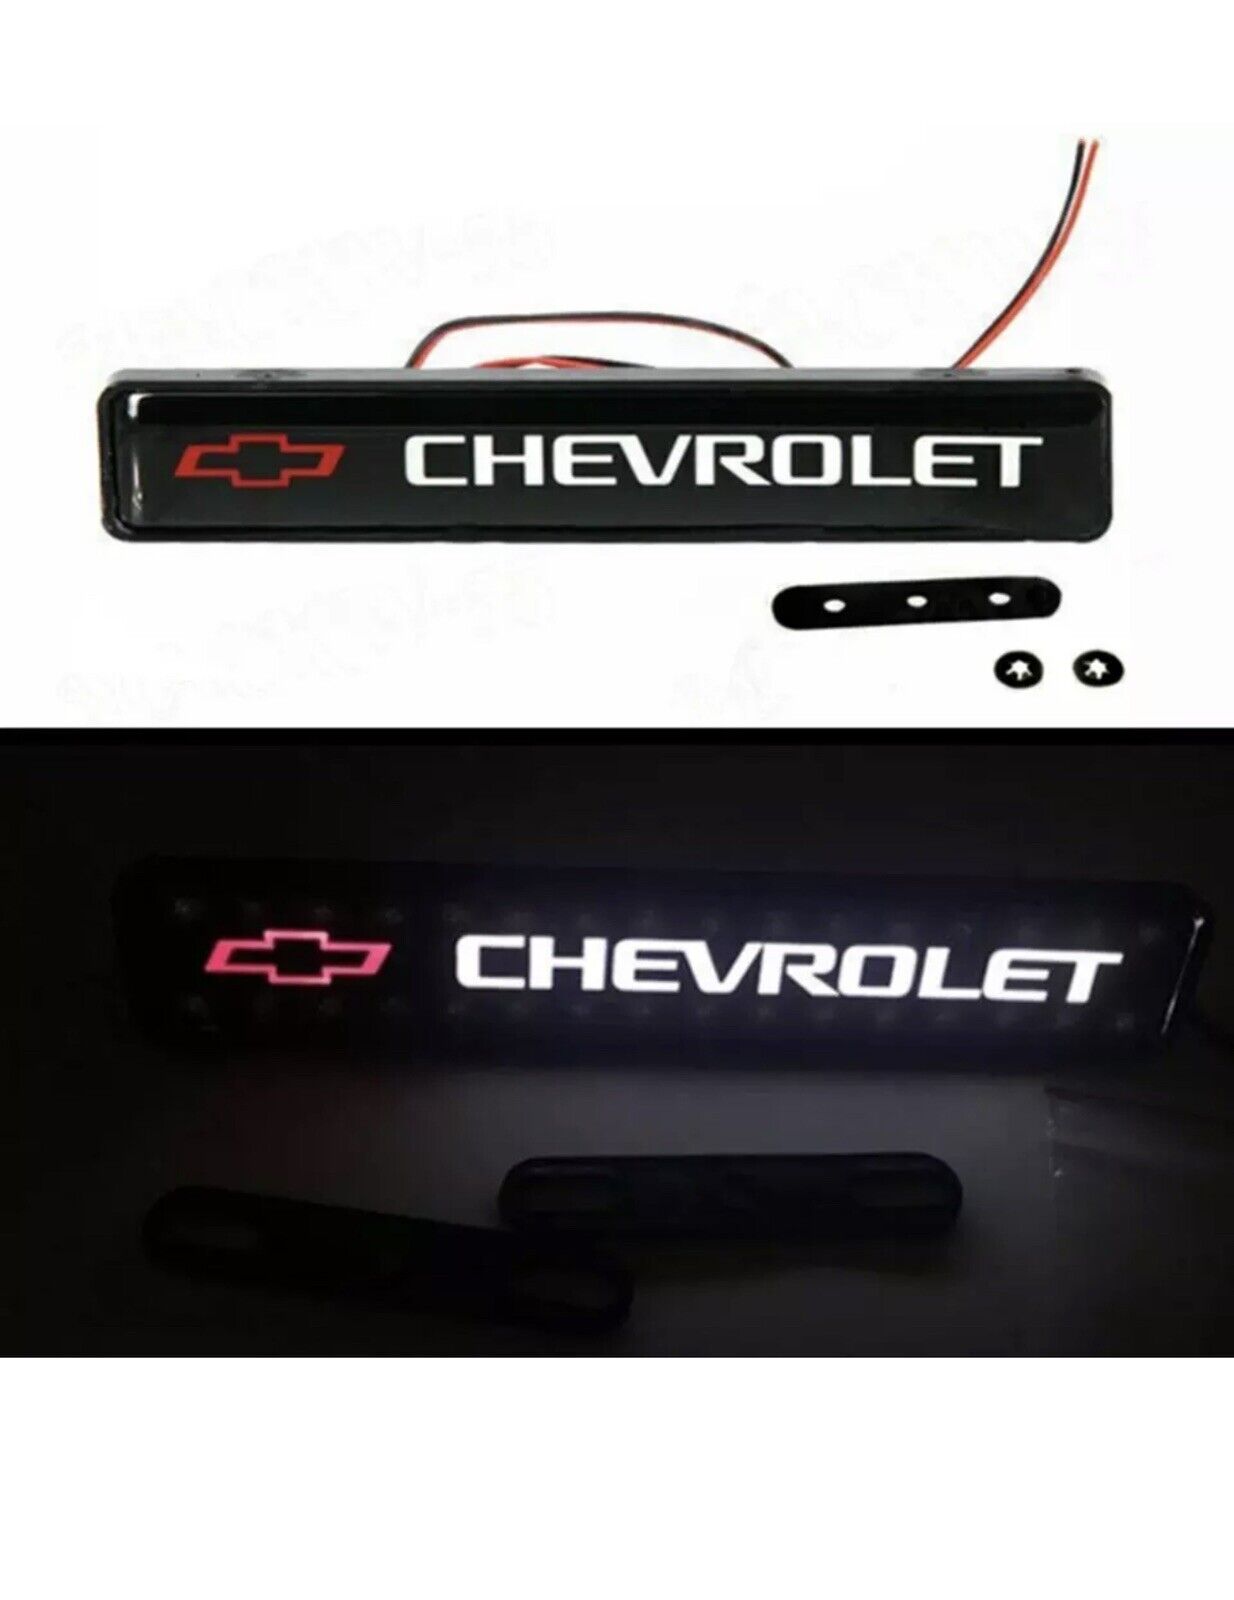 1 Pcs For Chevrolet LED Light Car Grille Emblem Illuminated Badge